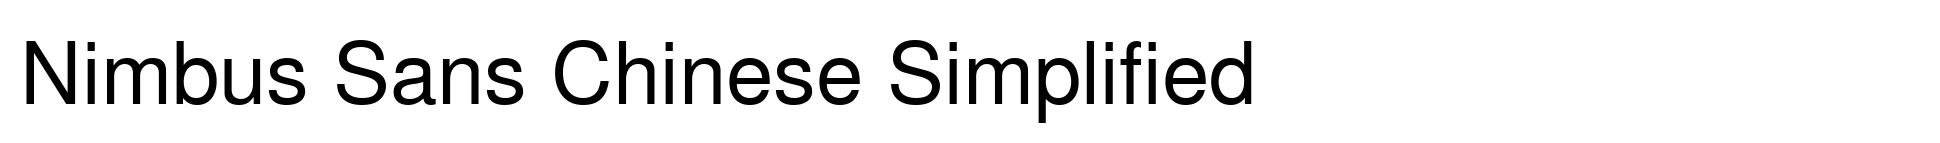 Nimbus Sans Chinese Simplified